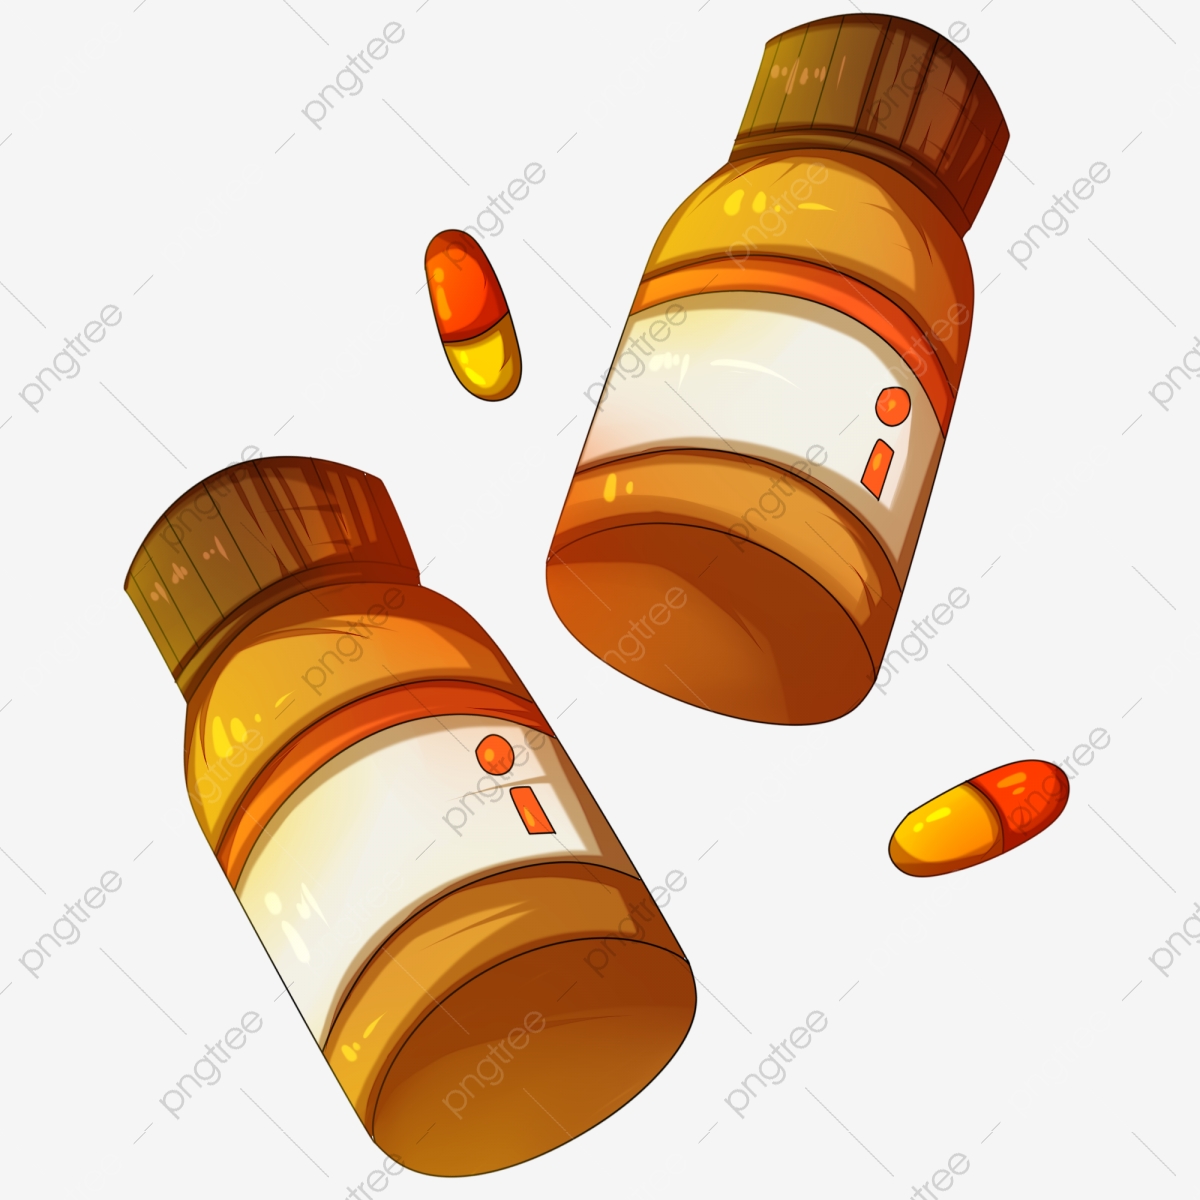 pill clipart drug use